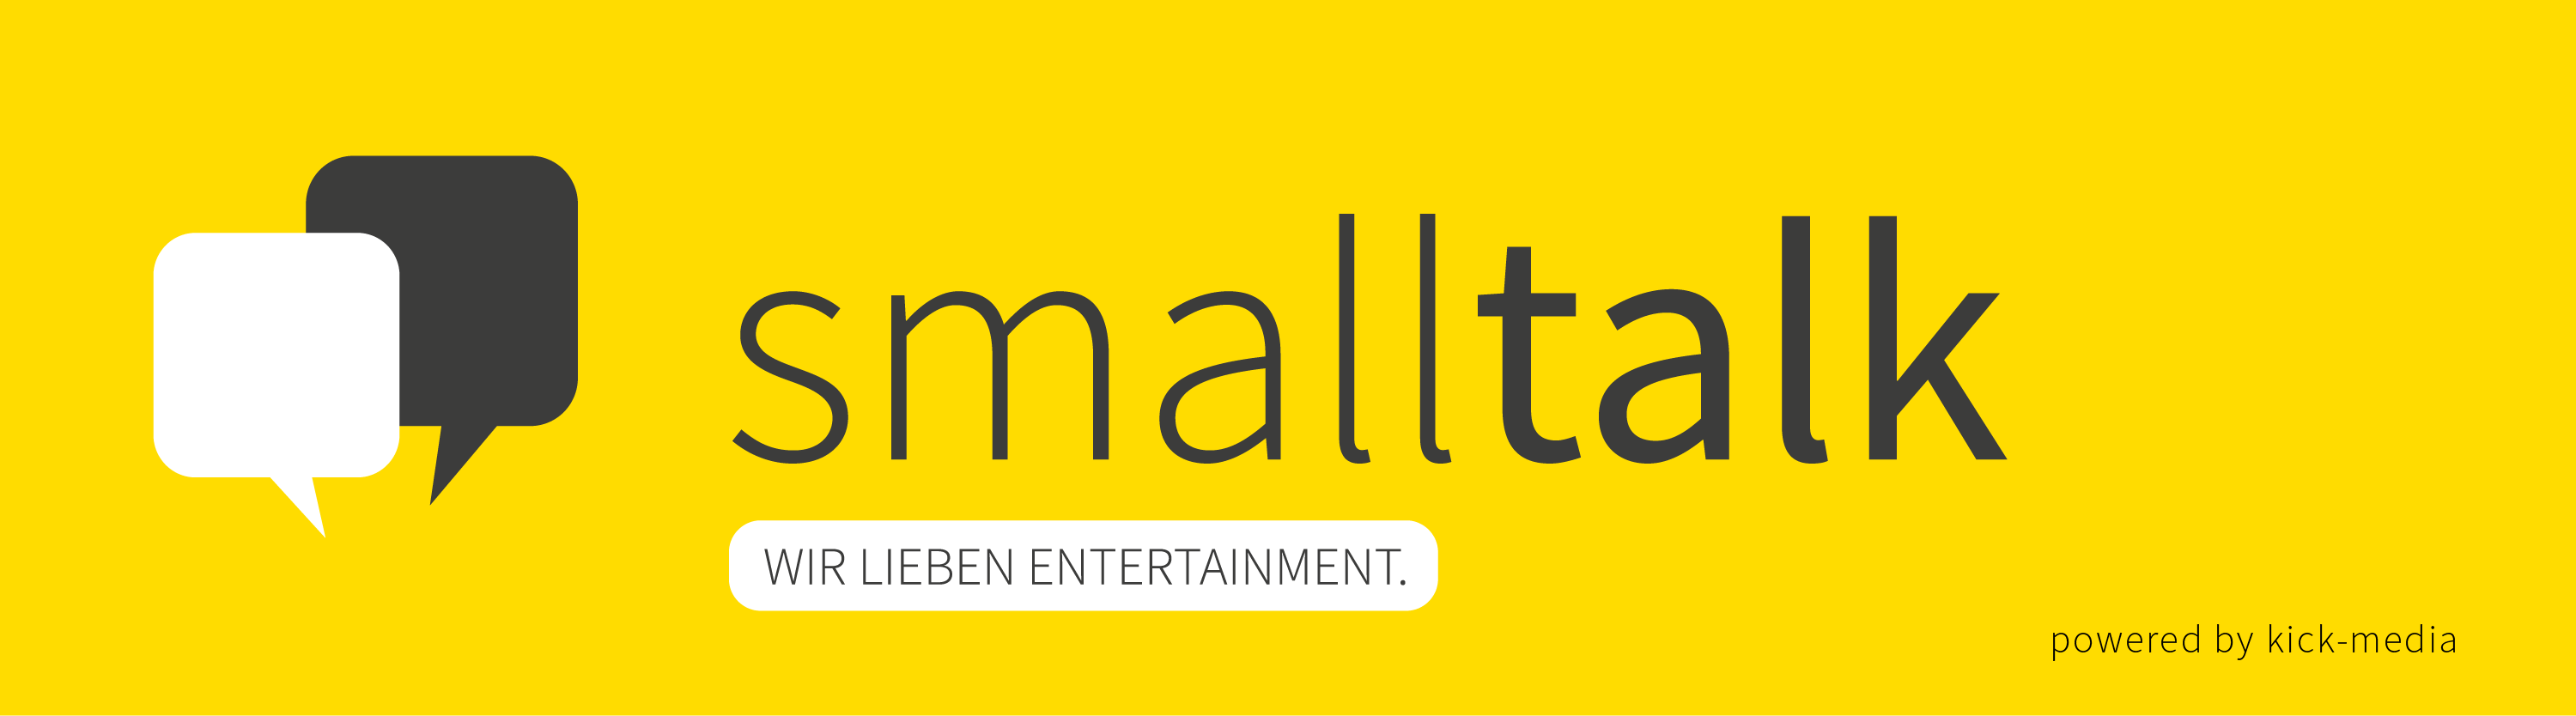 Smalltalk Entertainment  logo